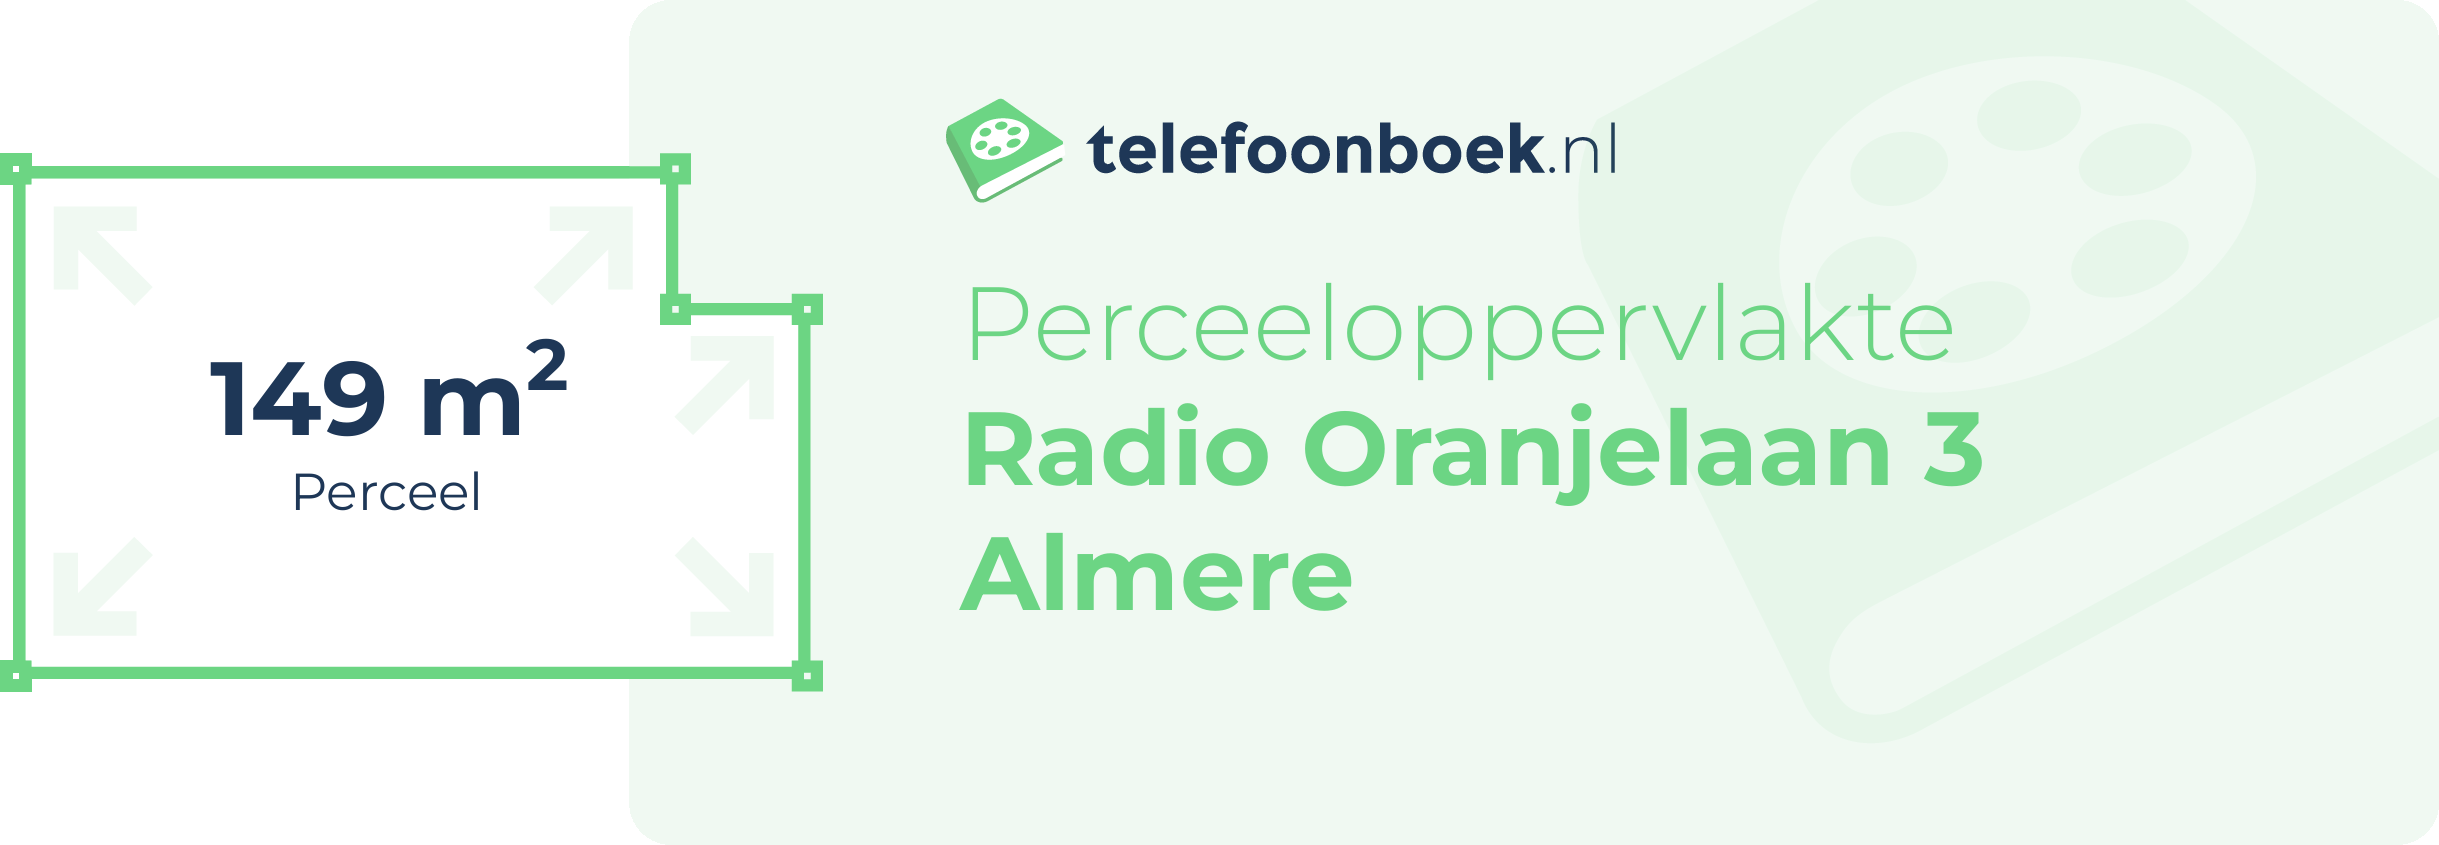 Perceeloppervlakte Radio Oranjelaan 3 Almere